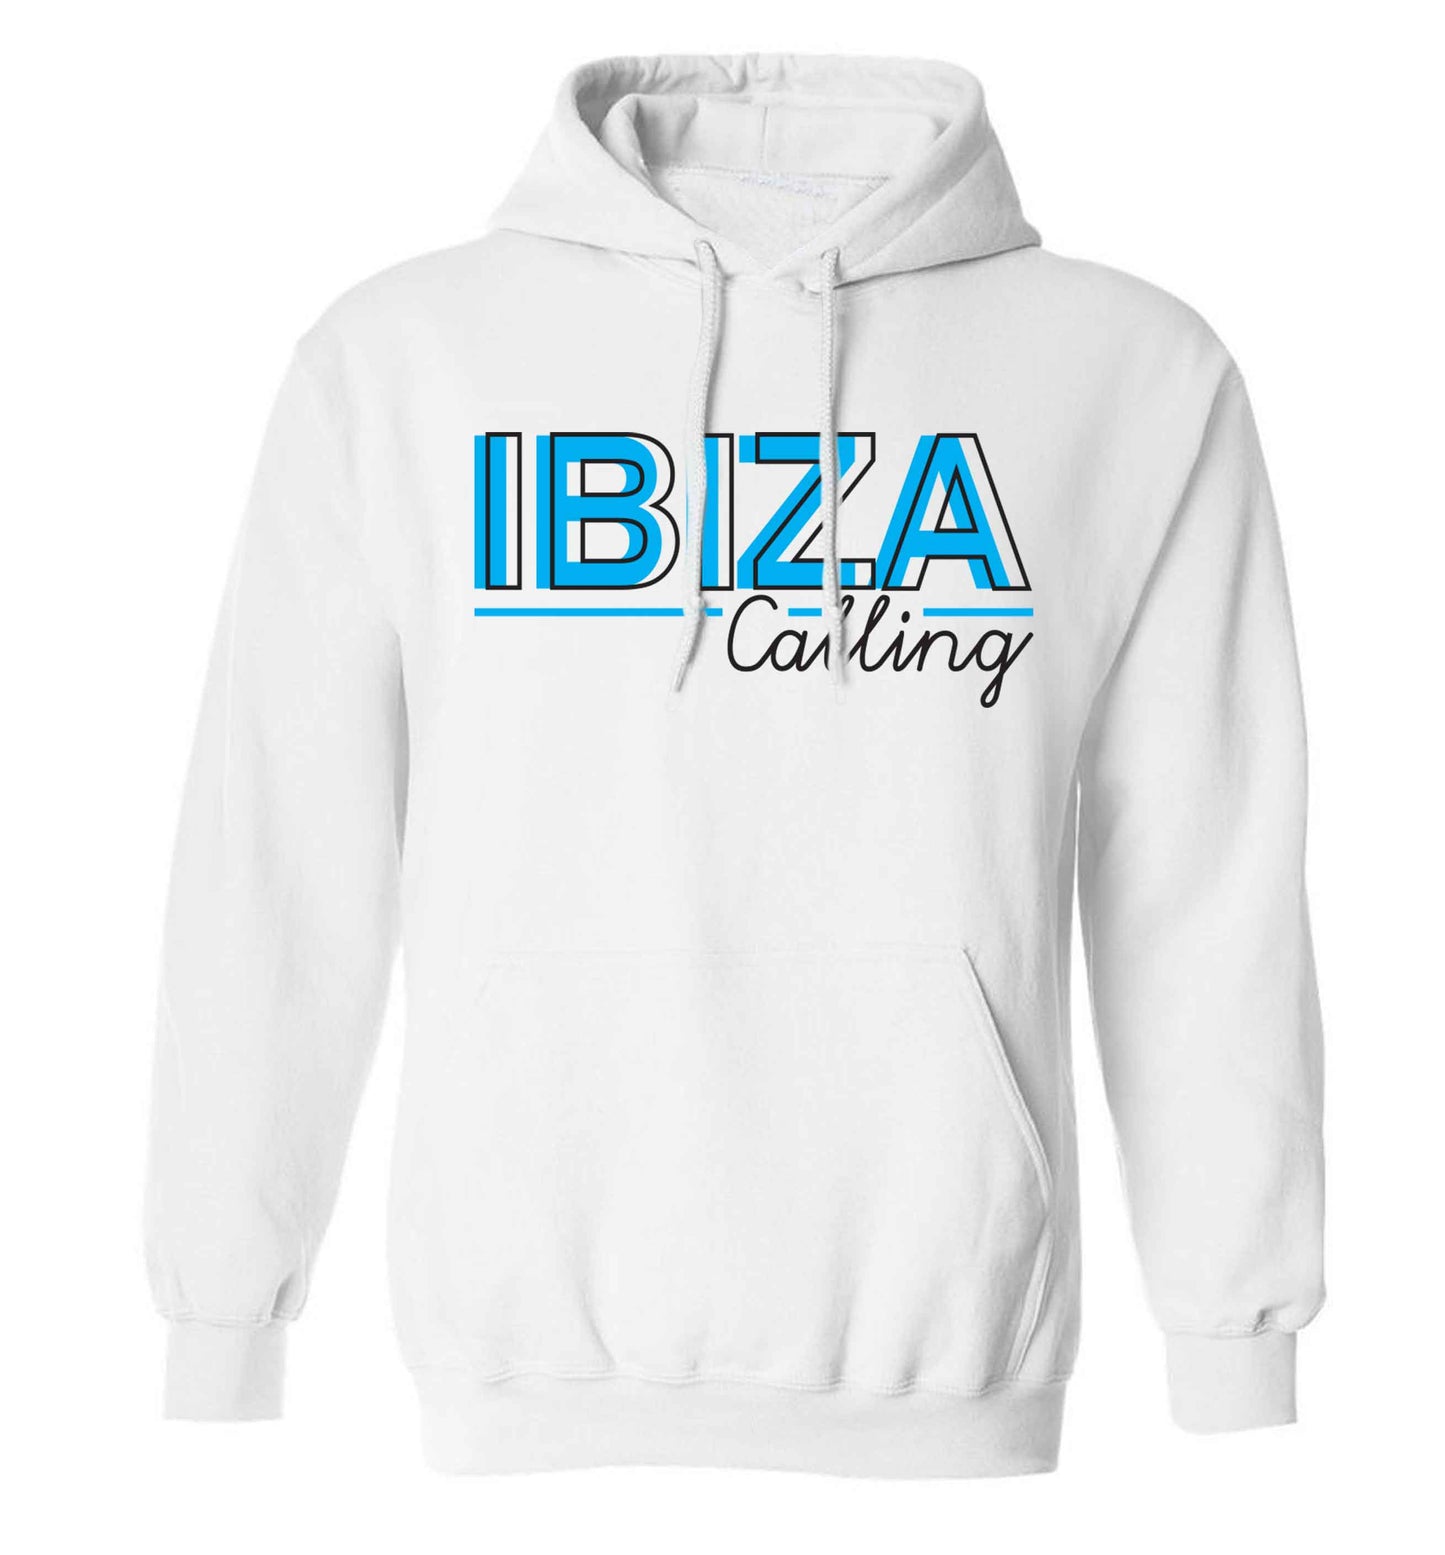 Ibiza calling adults unisex white hoodie 2XL